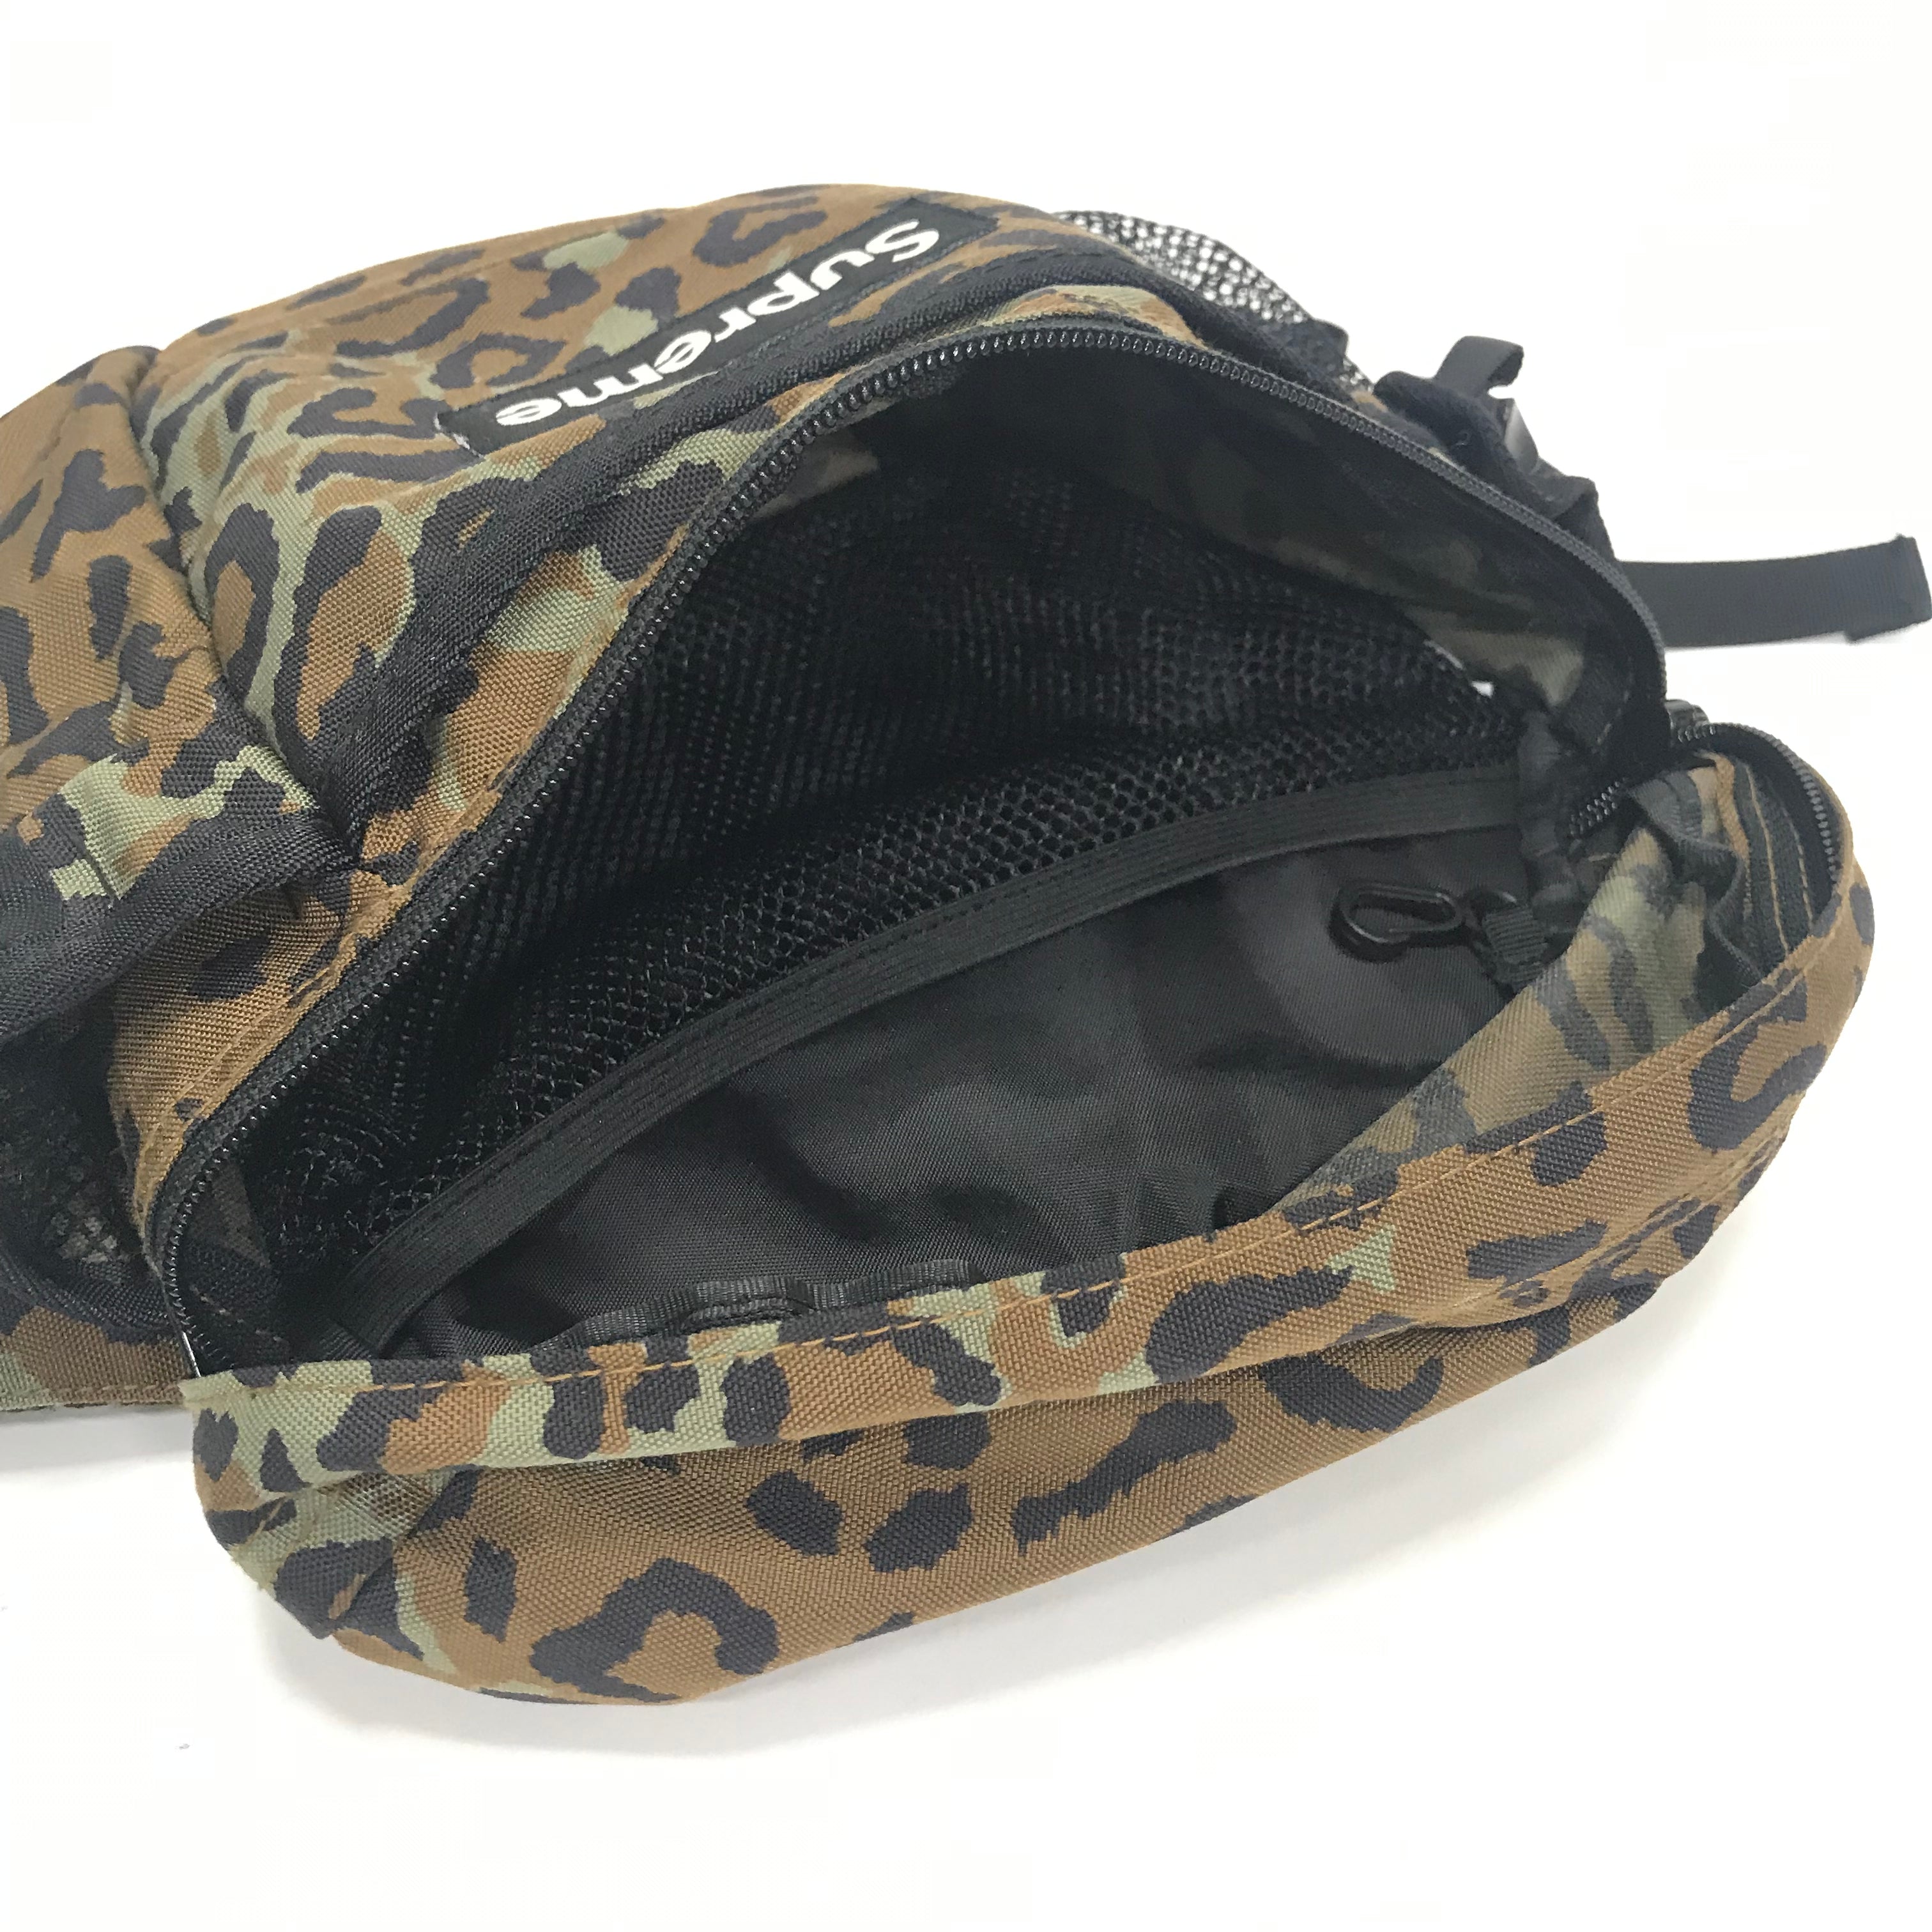 Supreme Leopard Camo Waist Bag –